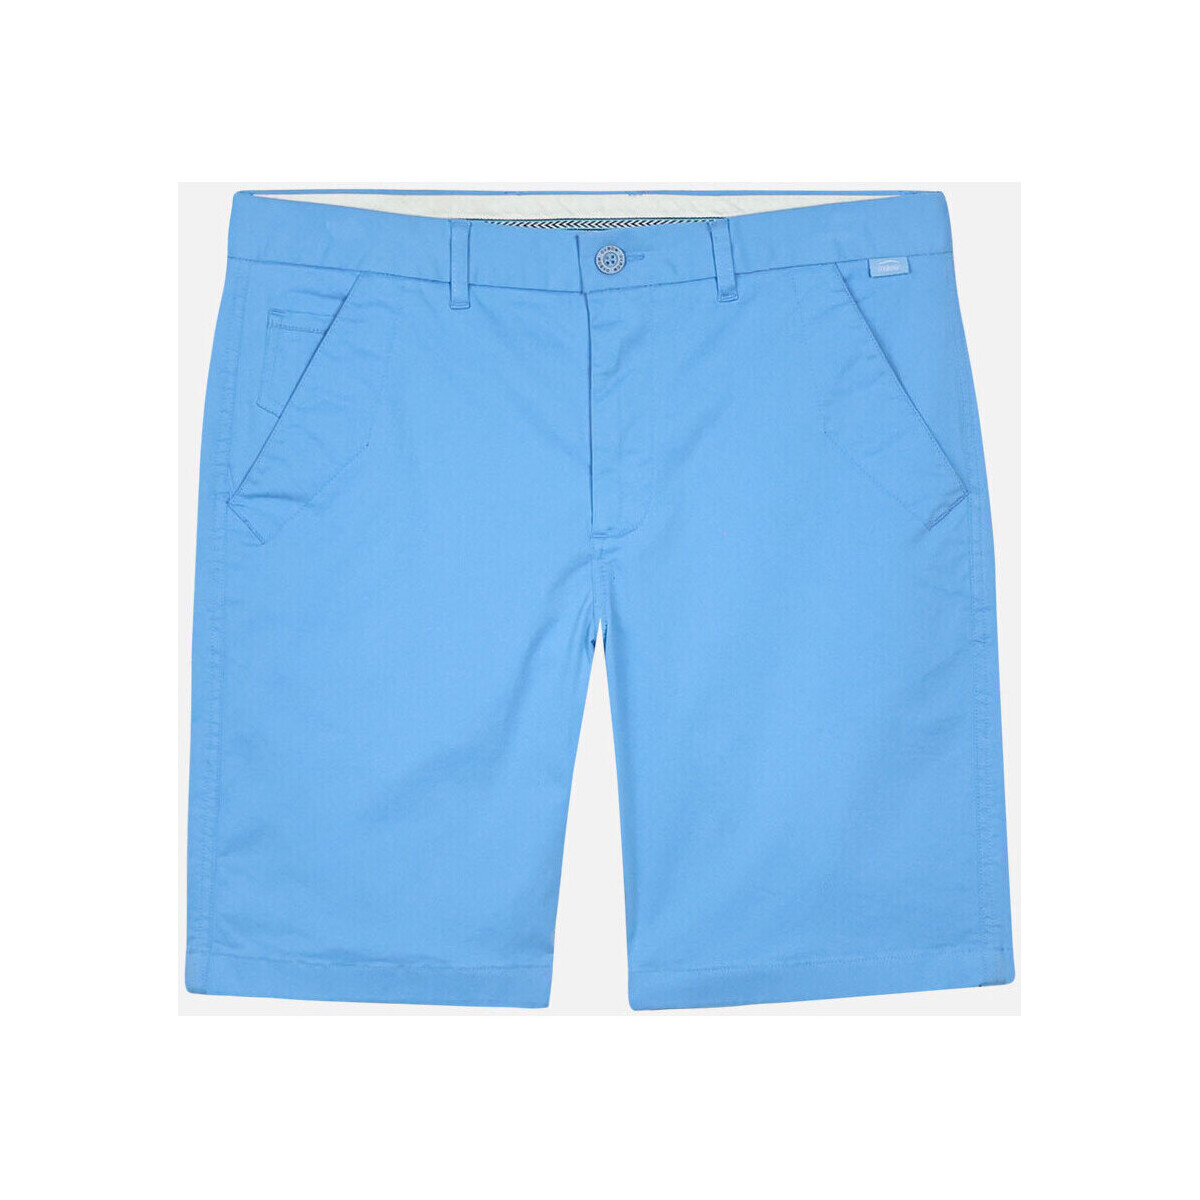 Kleidung Herren Shorts / Bermudas Oxbow Short chino ONAGH Blau